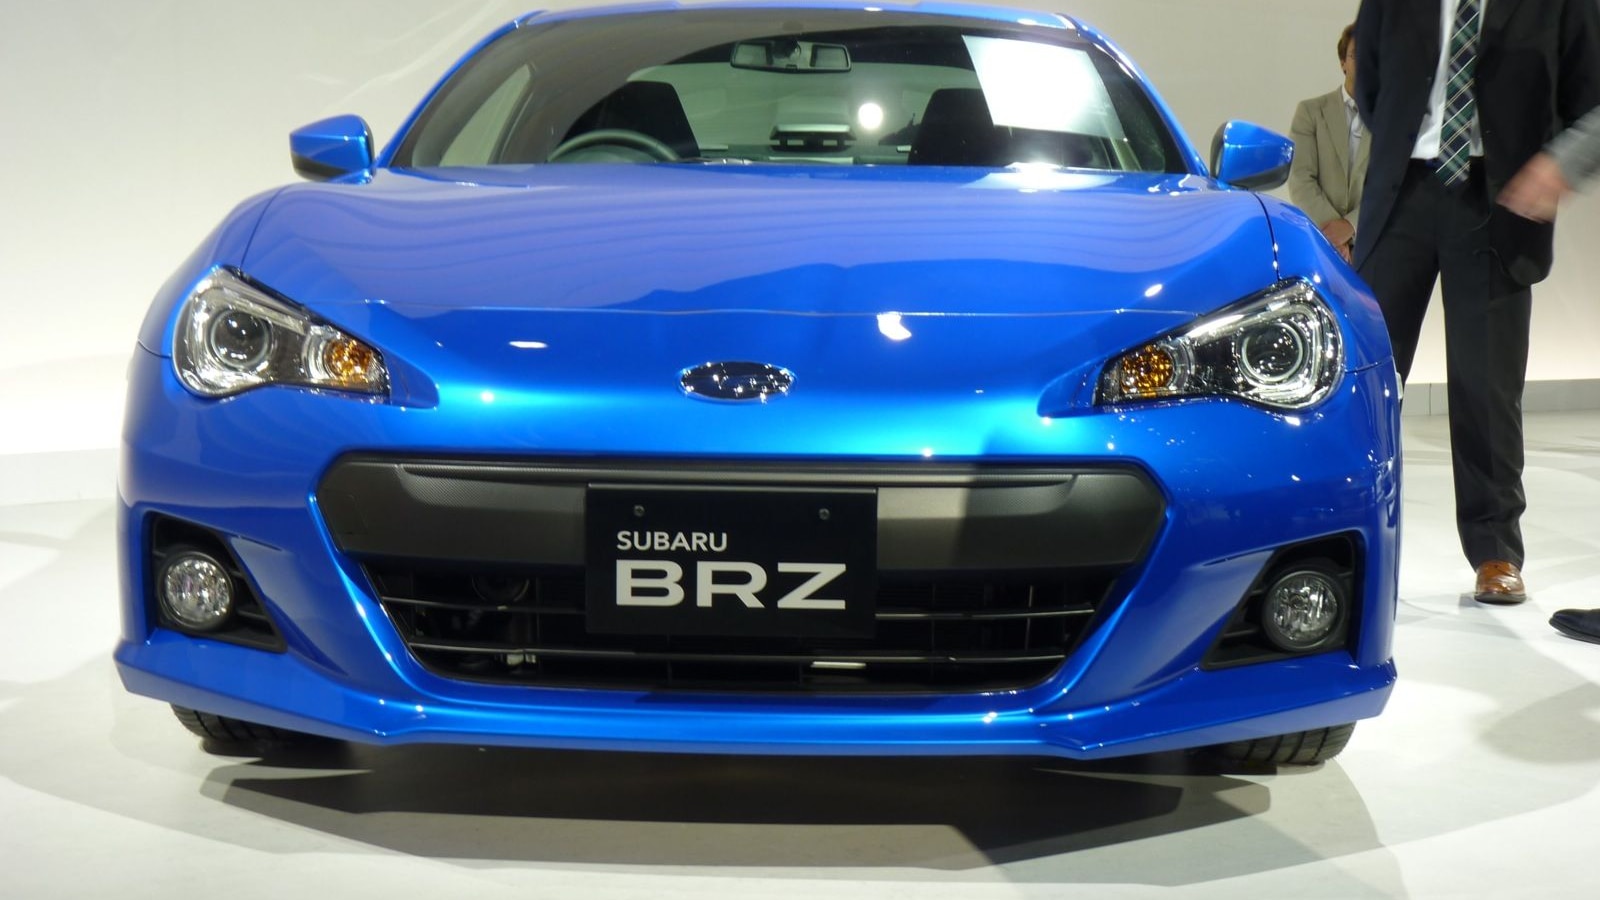 2013 Subaru BRZ, Scion FR-S Get EPA Fuel Economy Ratings